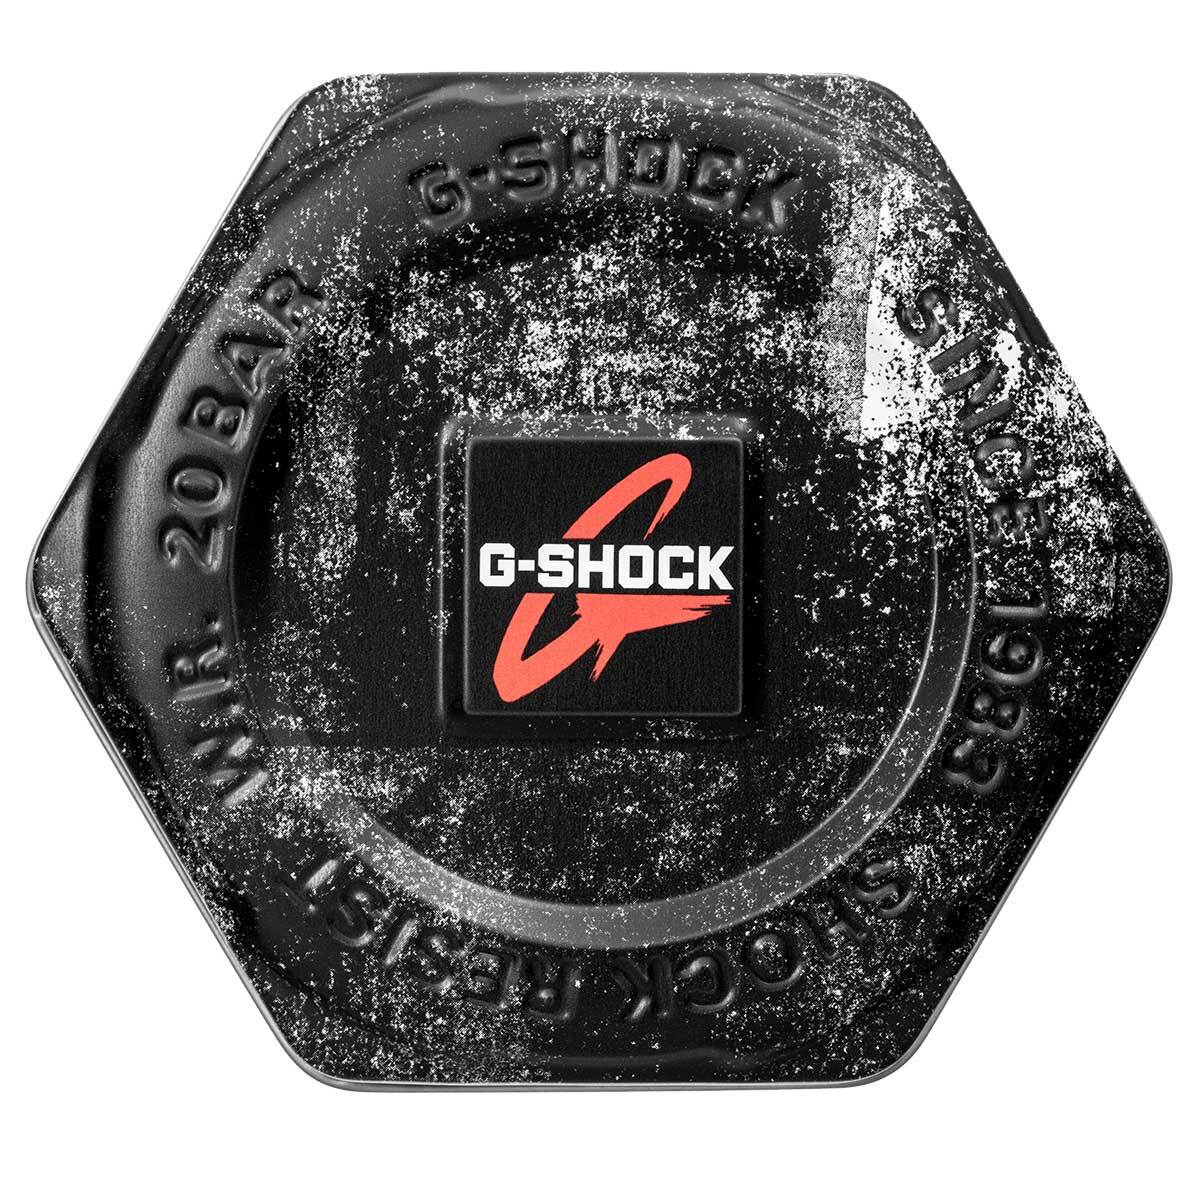 Годинник Casio G-Shock Master of G Premium Rangeman GW-9400-1ER